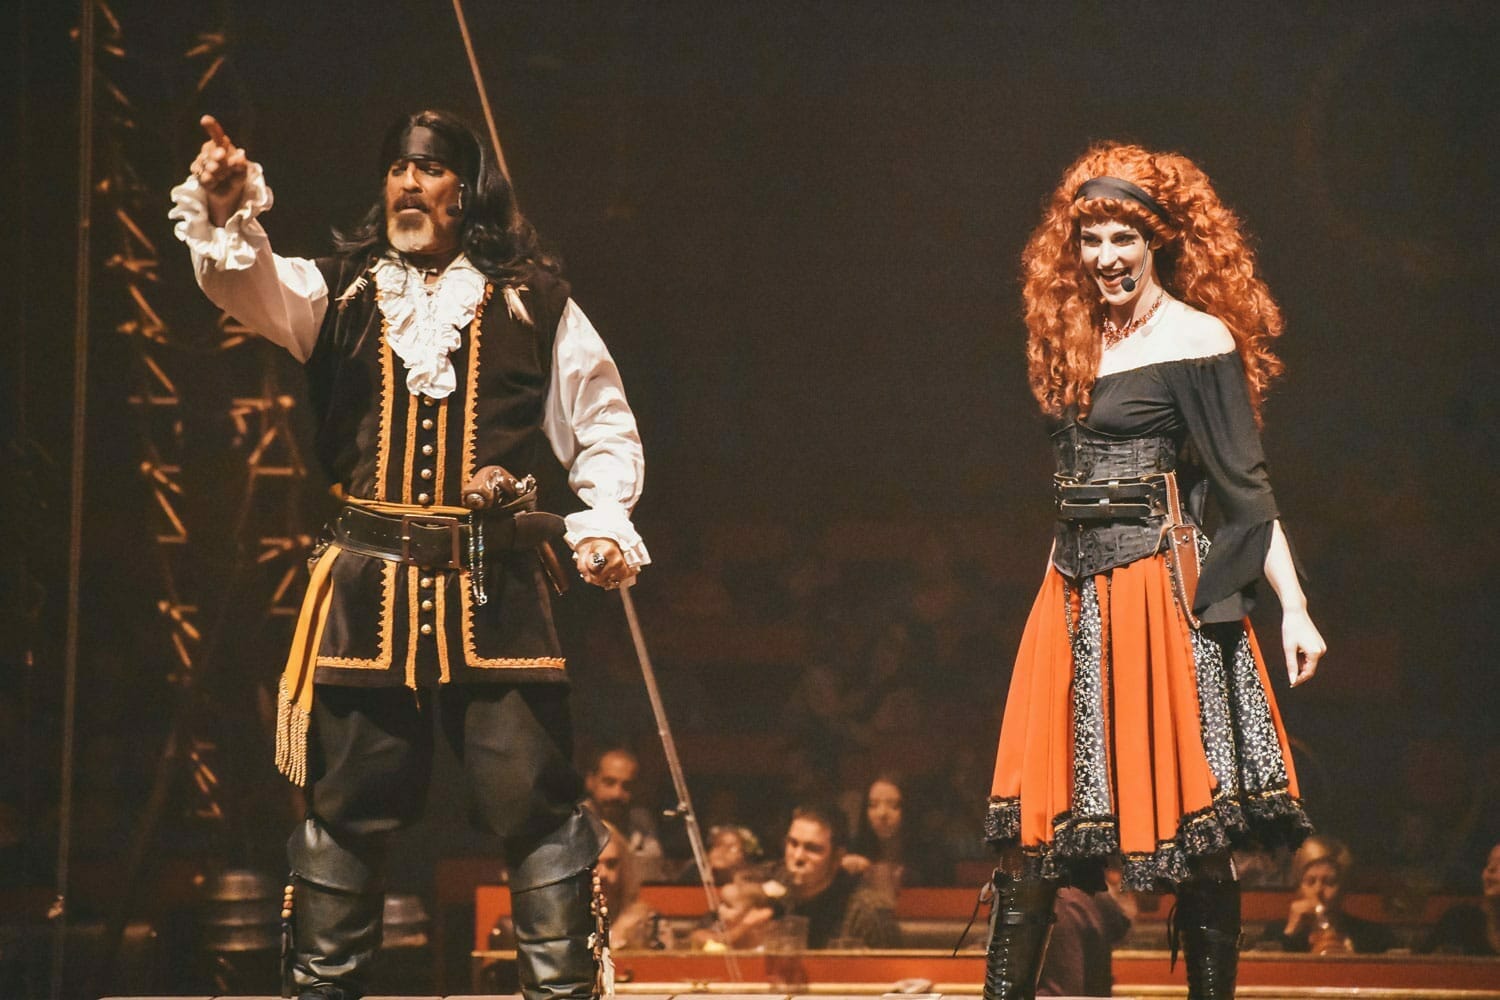 Pirates show - Orlando attraction